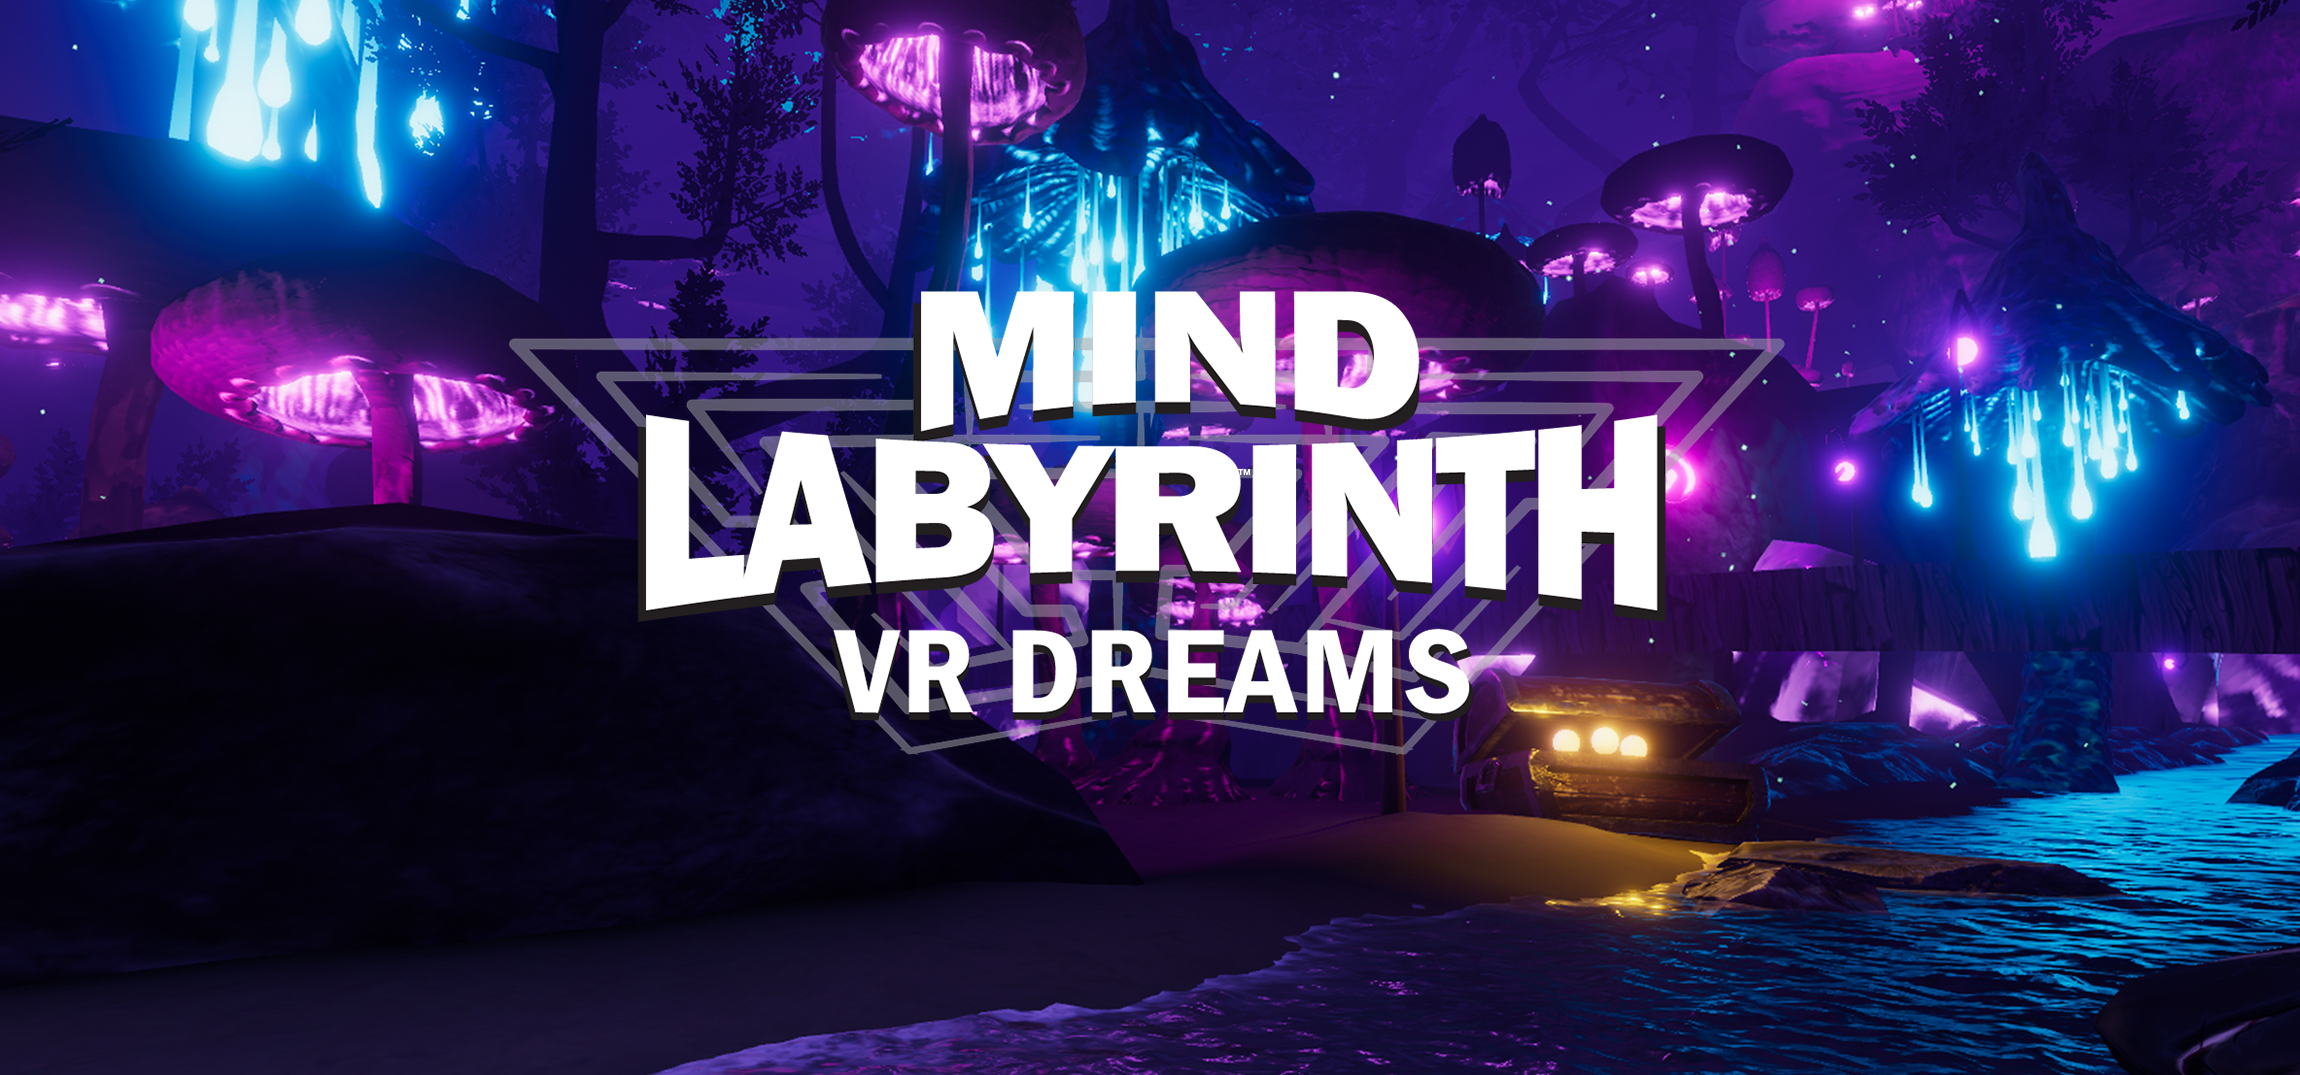 E3 2018: анонсировали Mind Labyrinth VR Dreams для PSVR и Oculus Rift